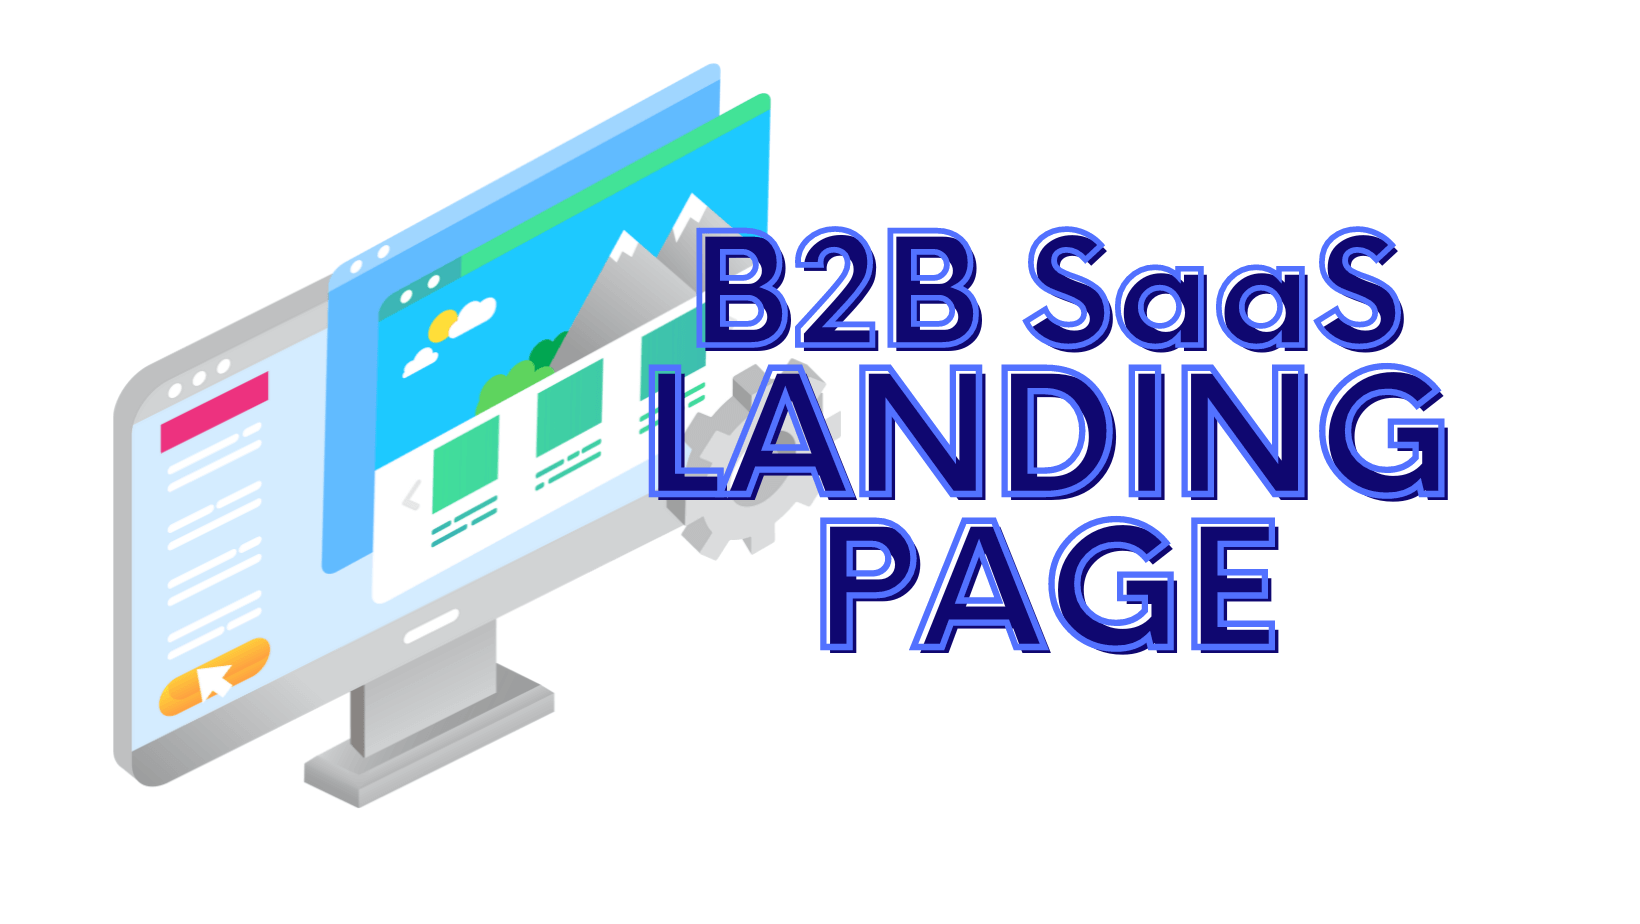 B2B SaaS Landing Page Header